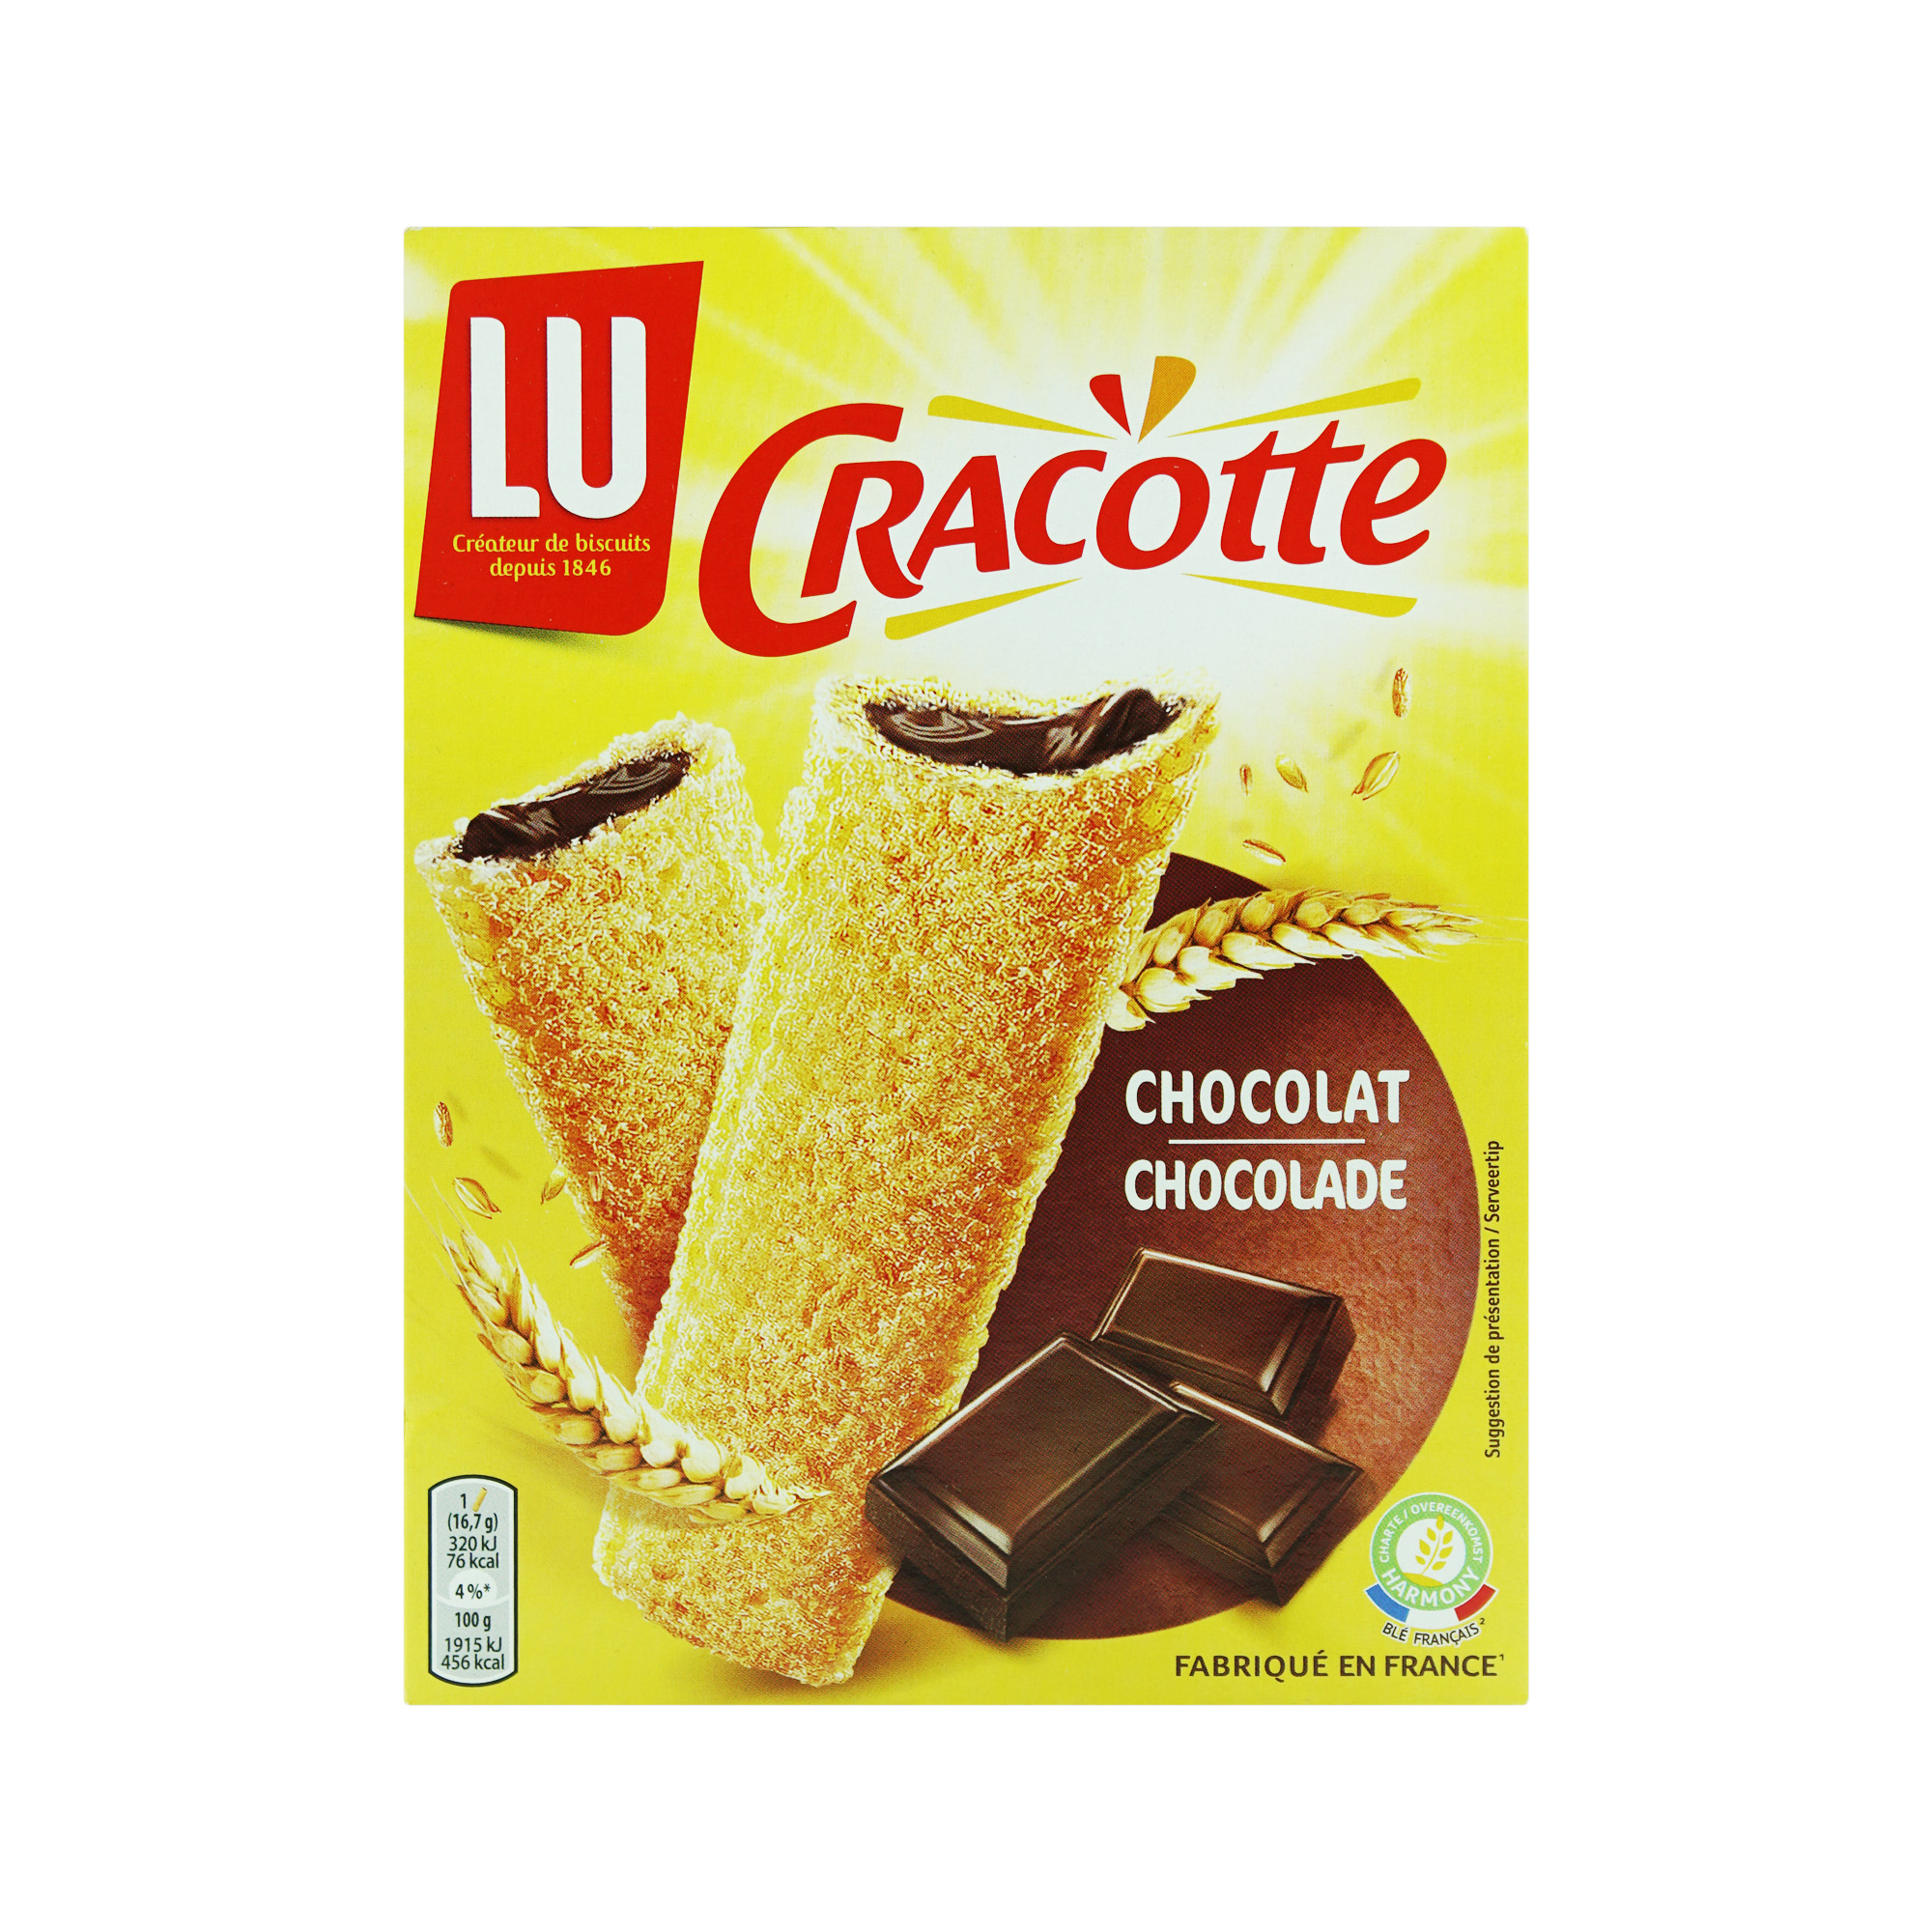 LU Cracotte Chocolate (200g)